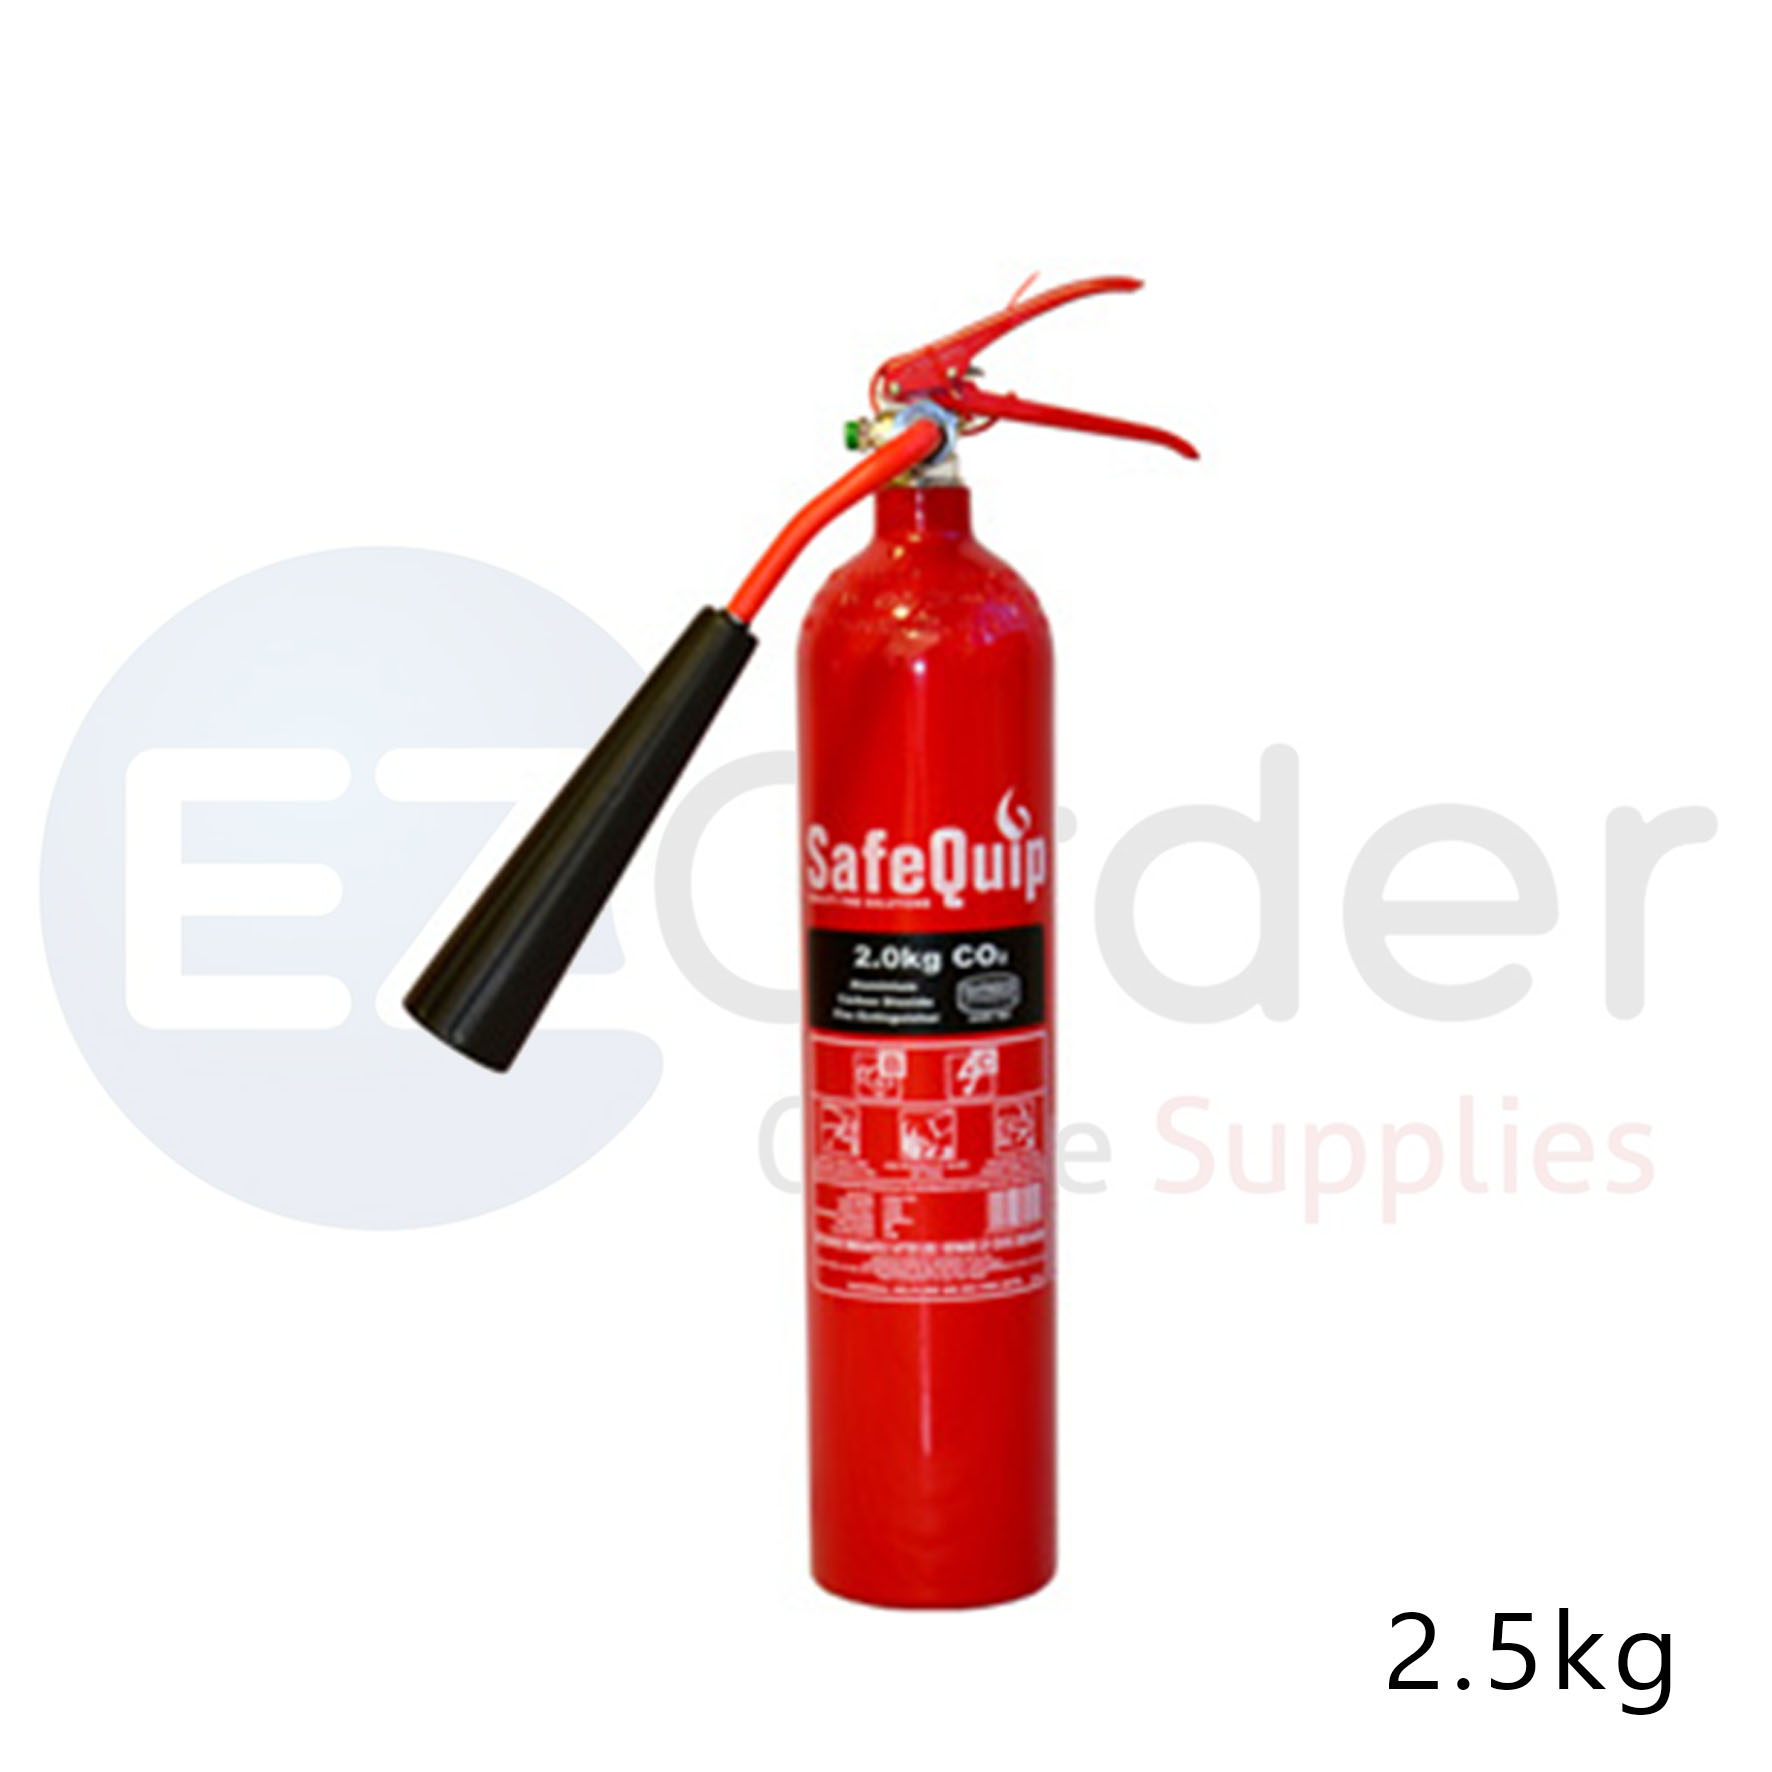 Fire extinguisher, CO2, 2kg.